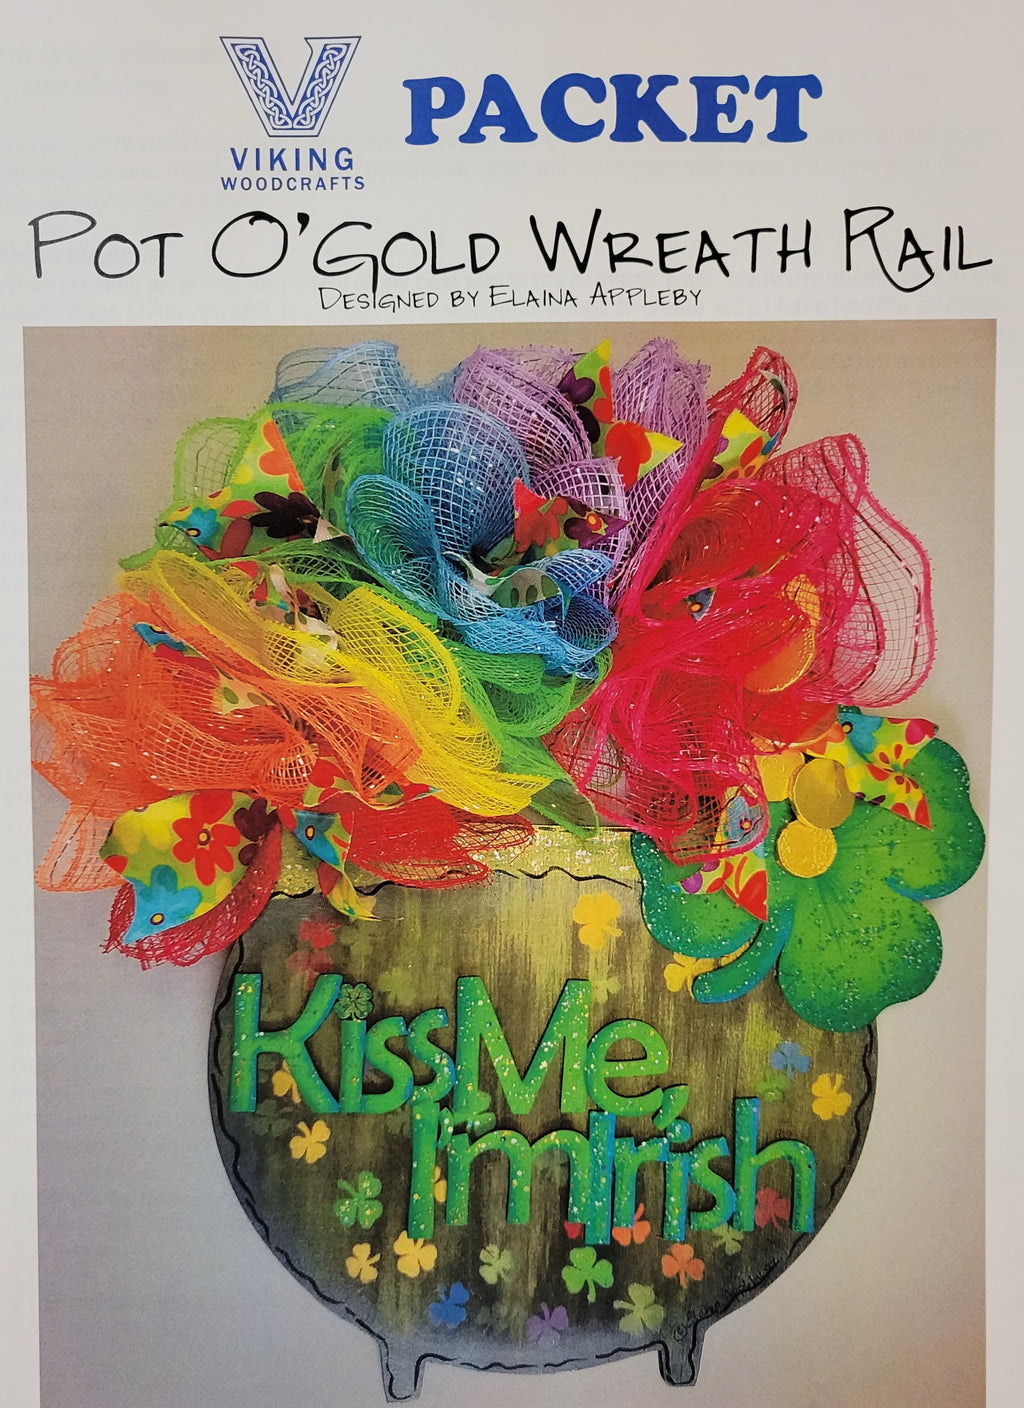 Pot O' Gold Wreath Rail Packet by Elaina Appleby